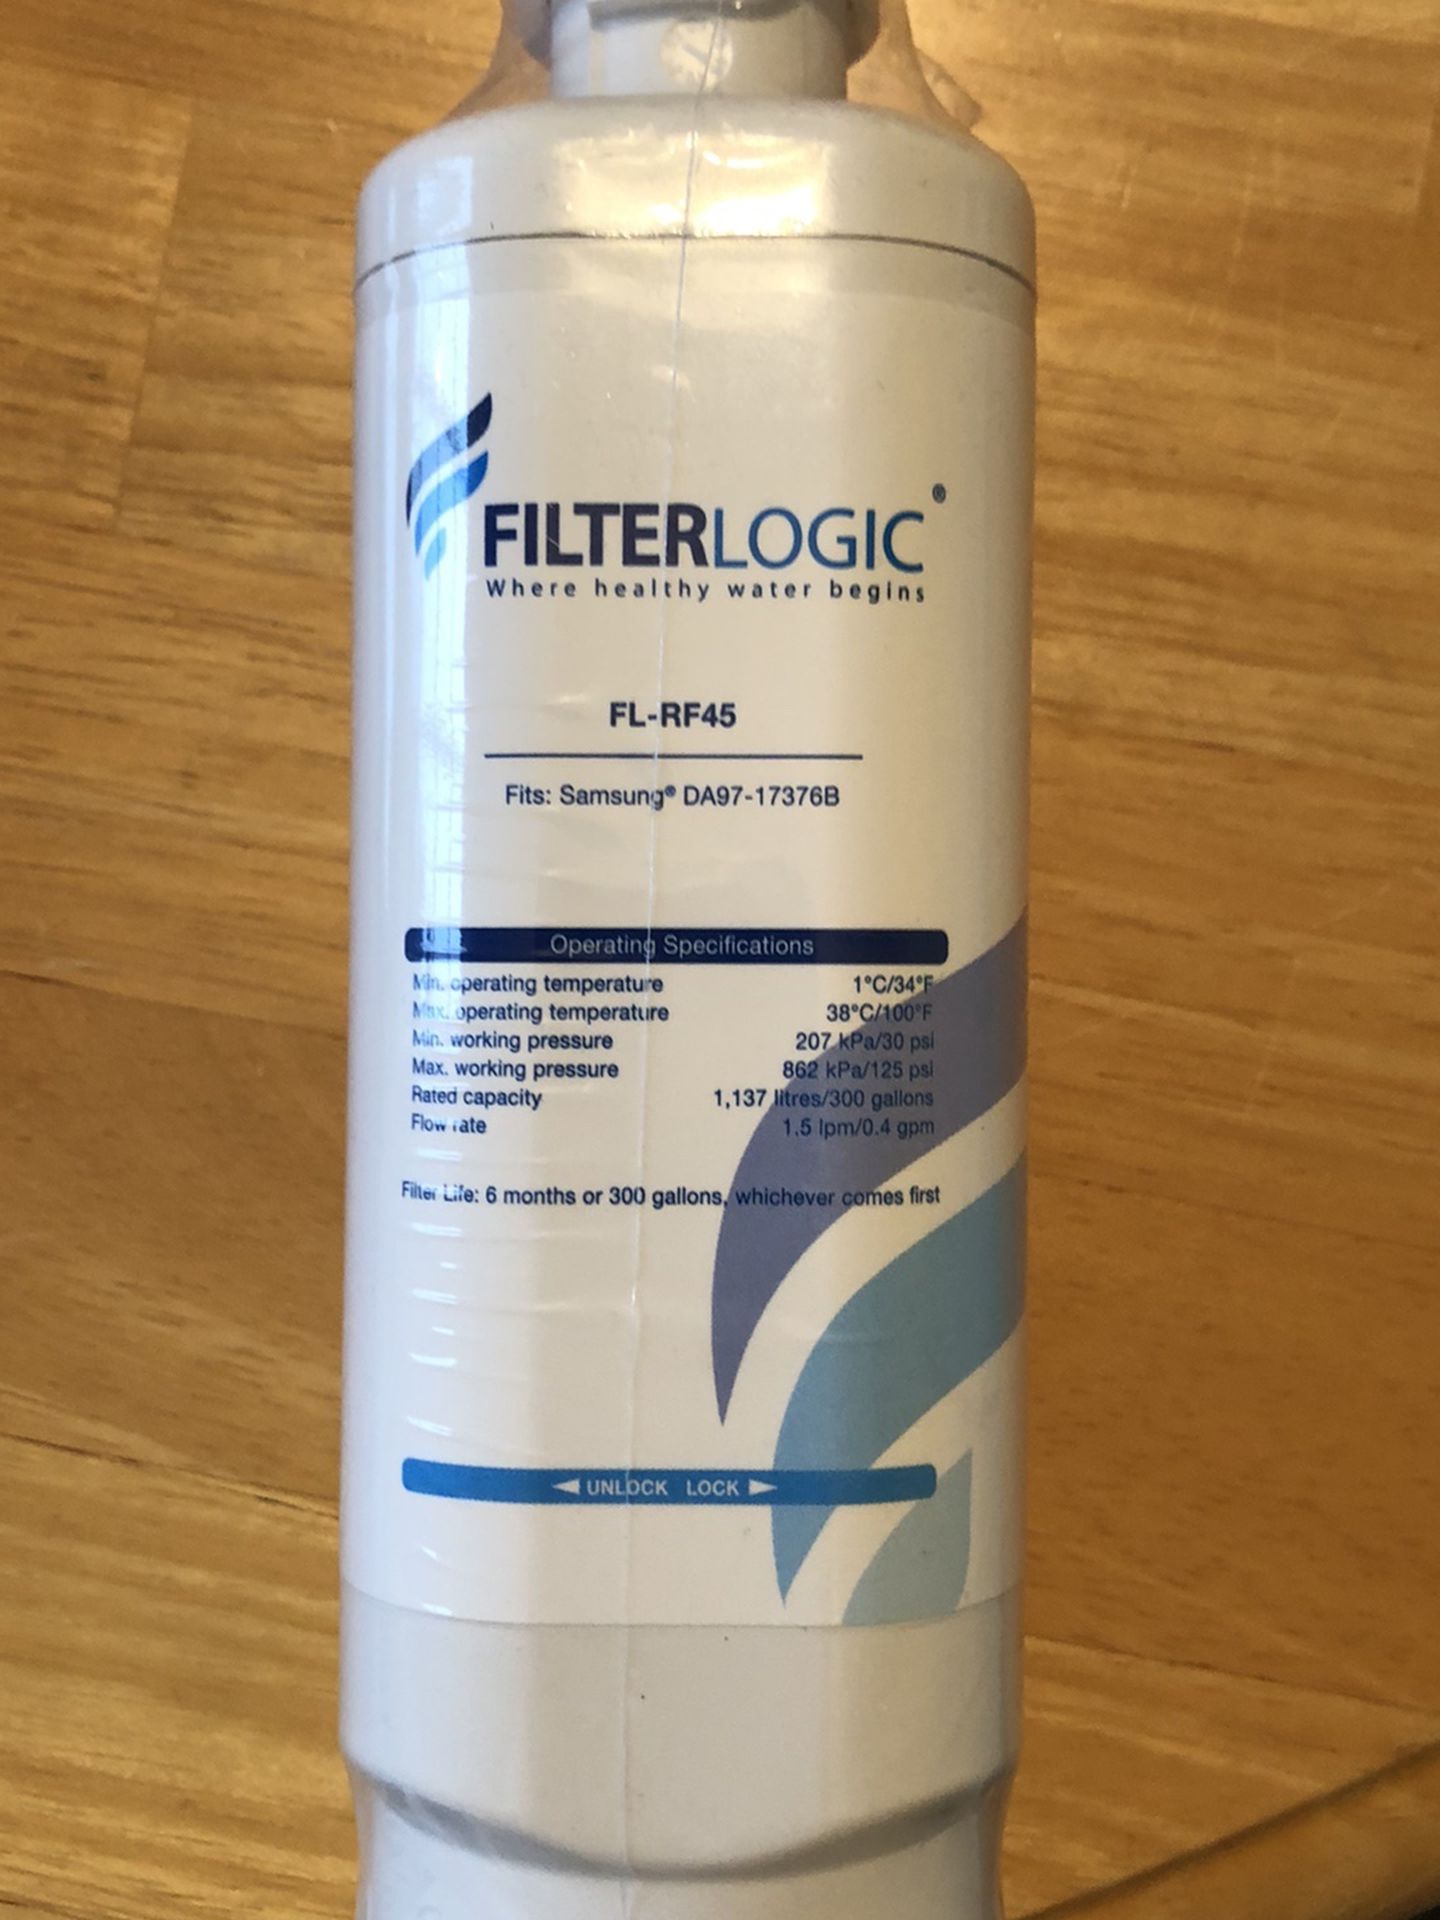 Water Filter DA97-17376B/FL-RF45